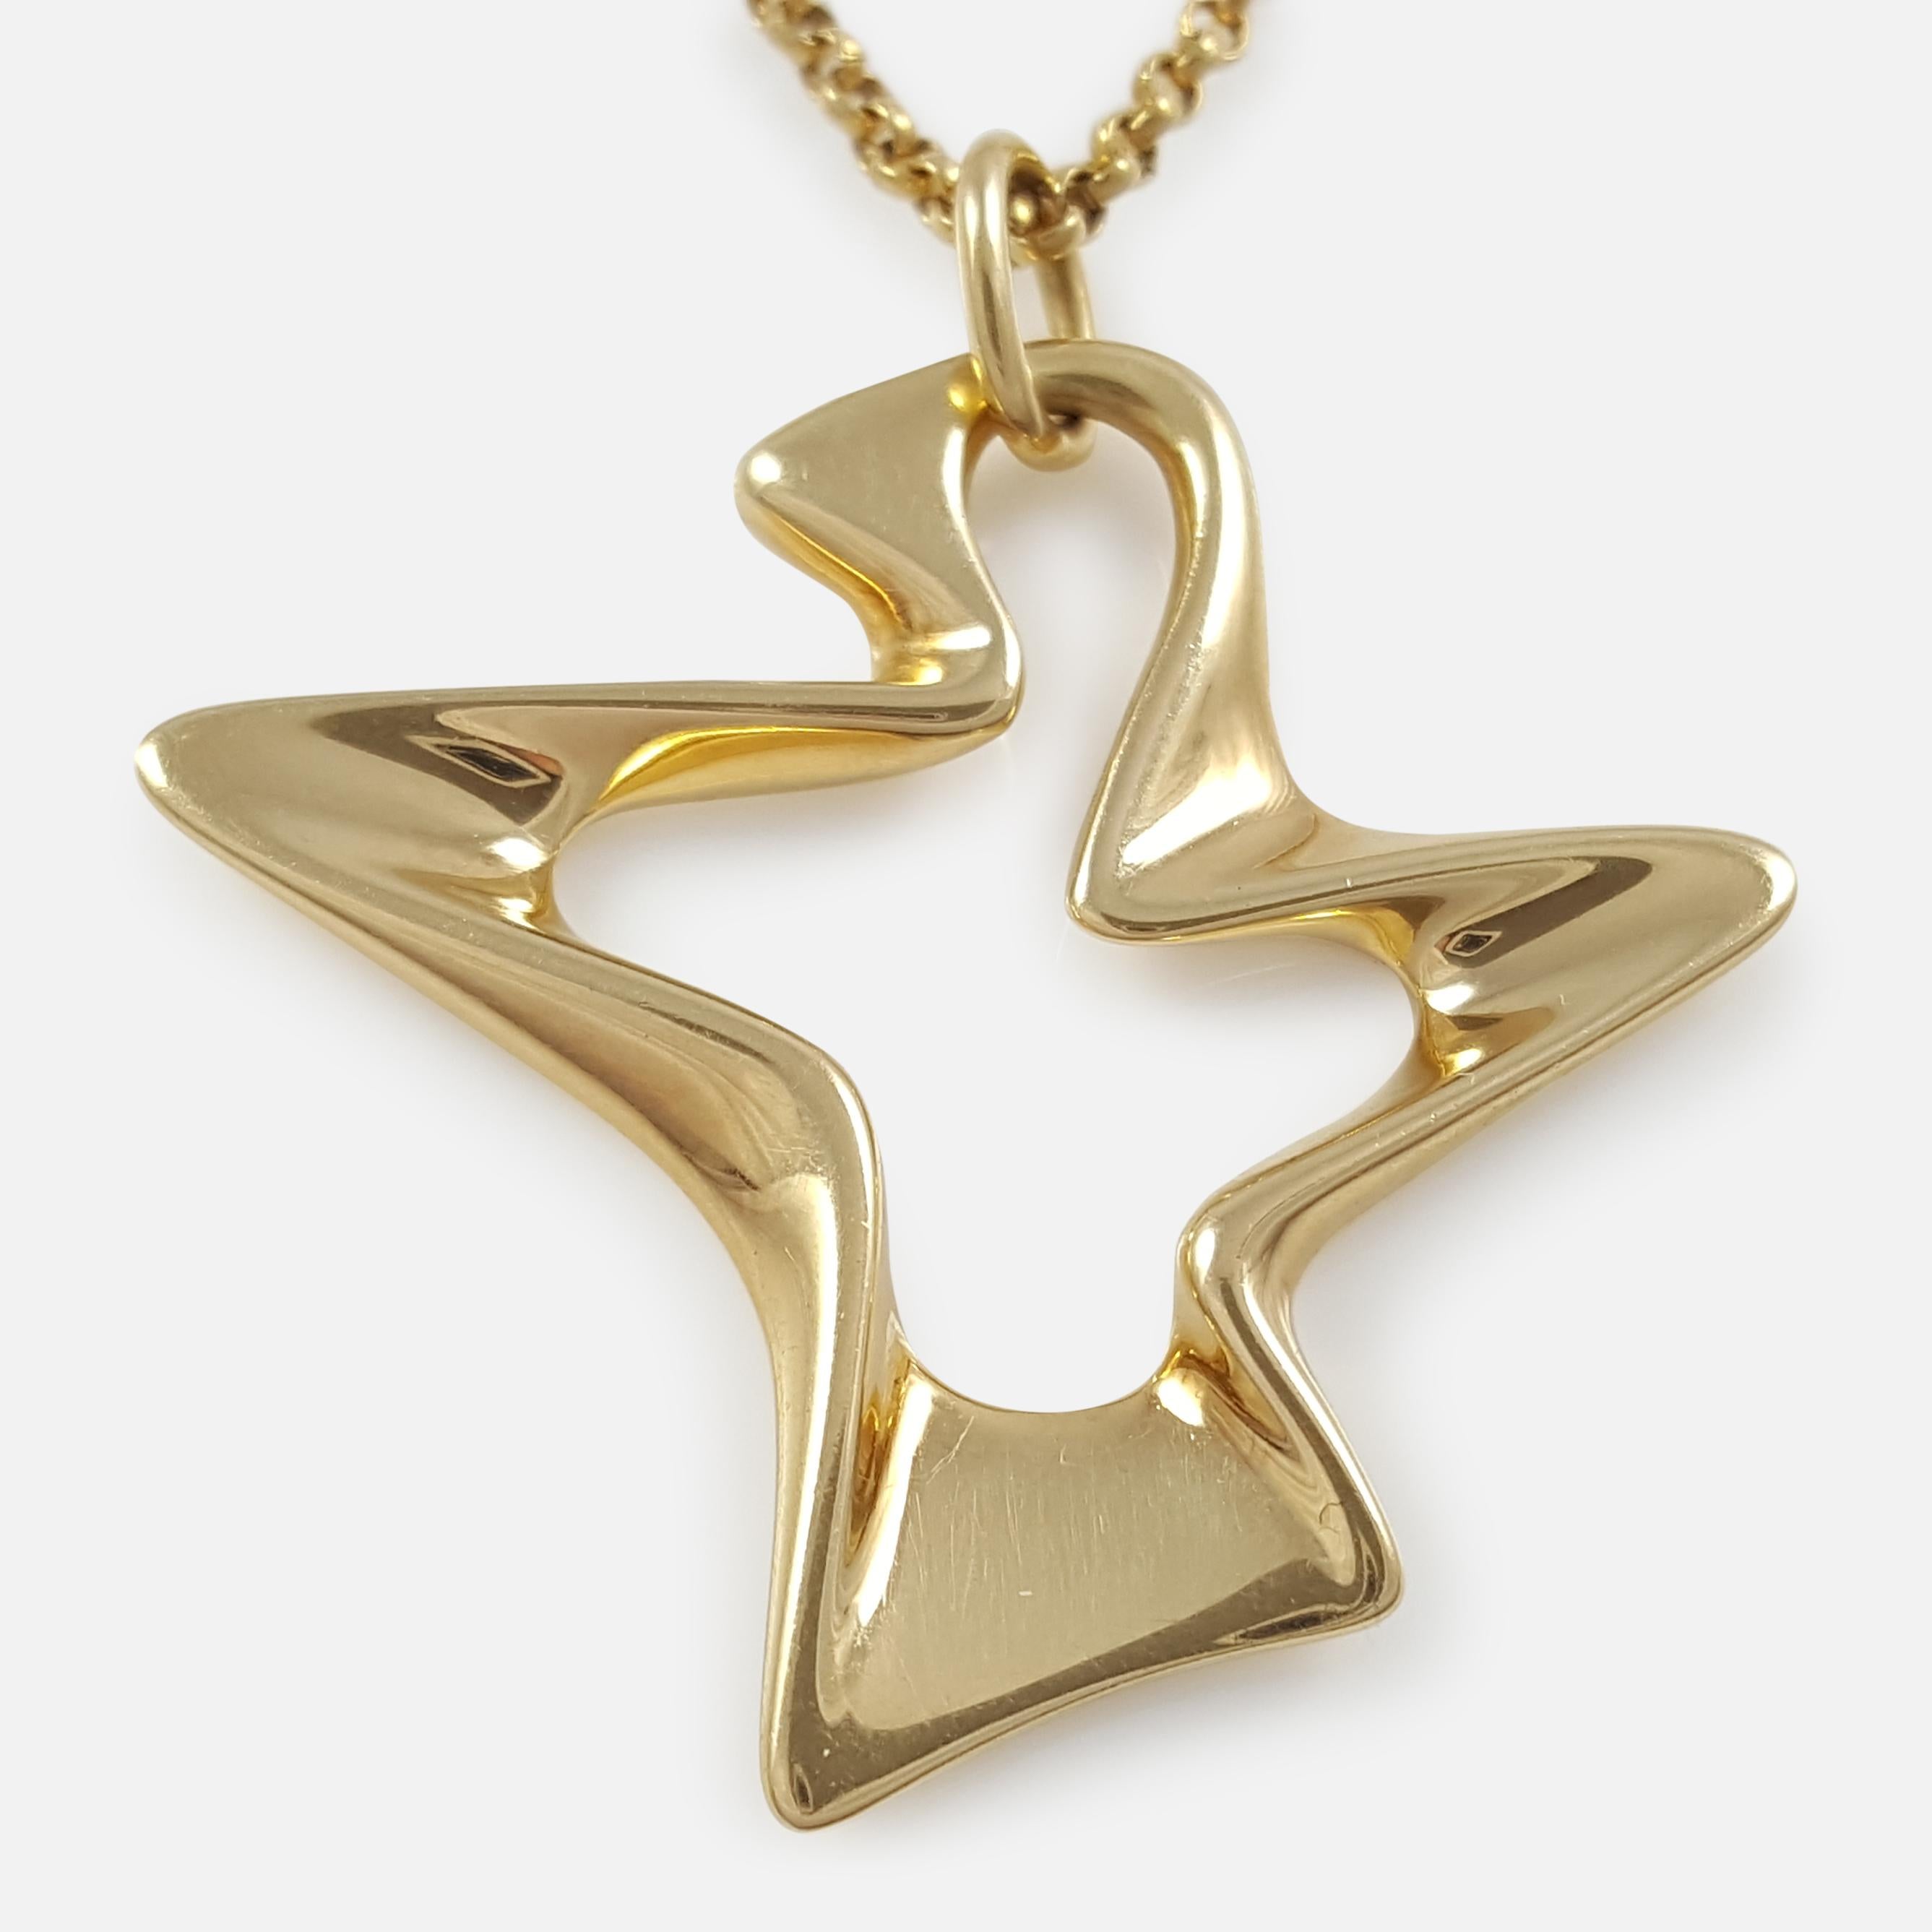 Description: - A superb vintage Georg Jensen 18 karat yellow gold Splash pendant and original chain. The pendant is designed by Henning Koppel for Georg Jensen. Stamped Georg Jensen within dotted oval mark, '750', 'HK 2000', and 'Denmark'.  The